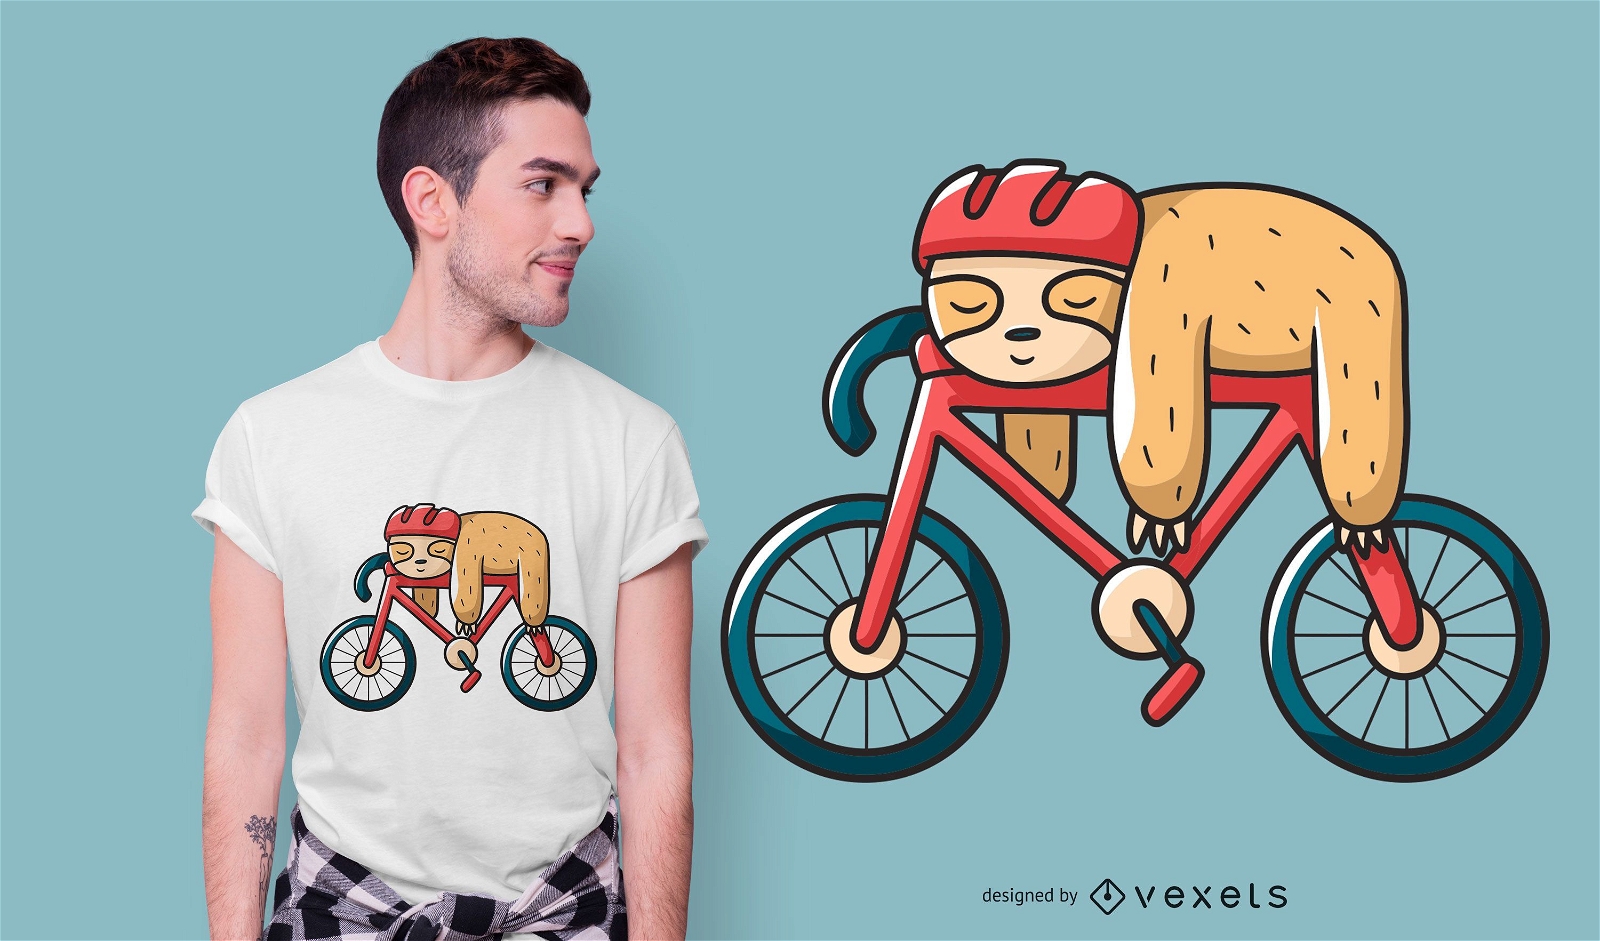 Bike sloth t-shirt design